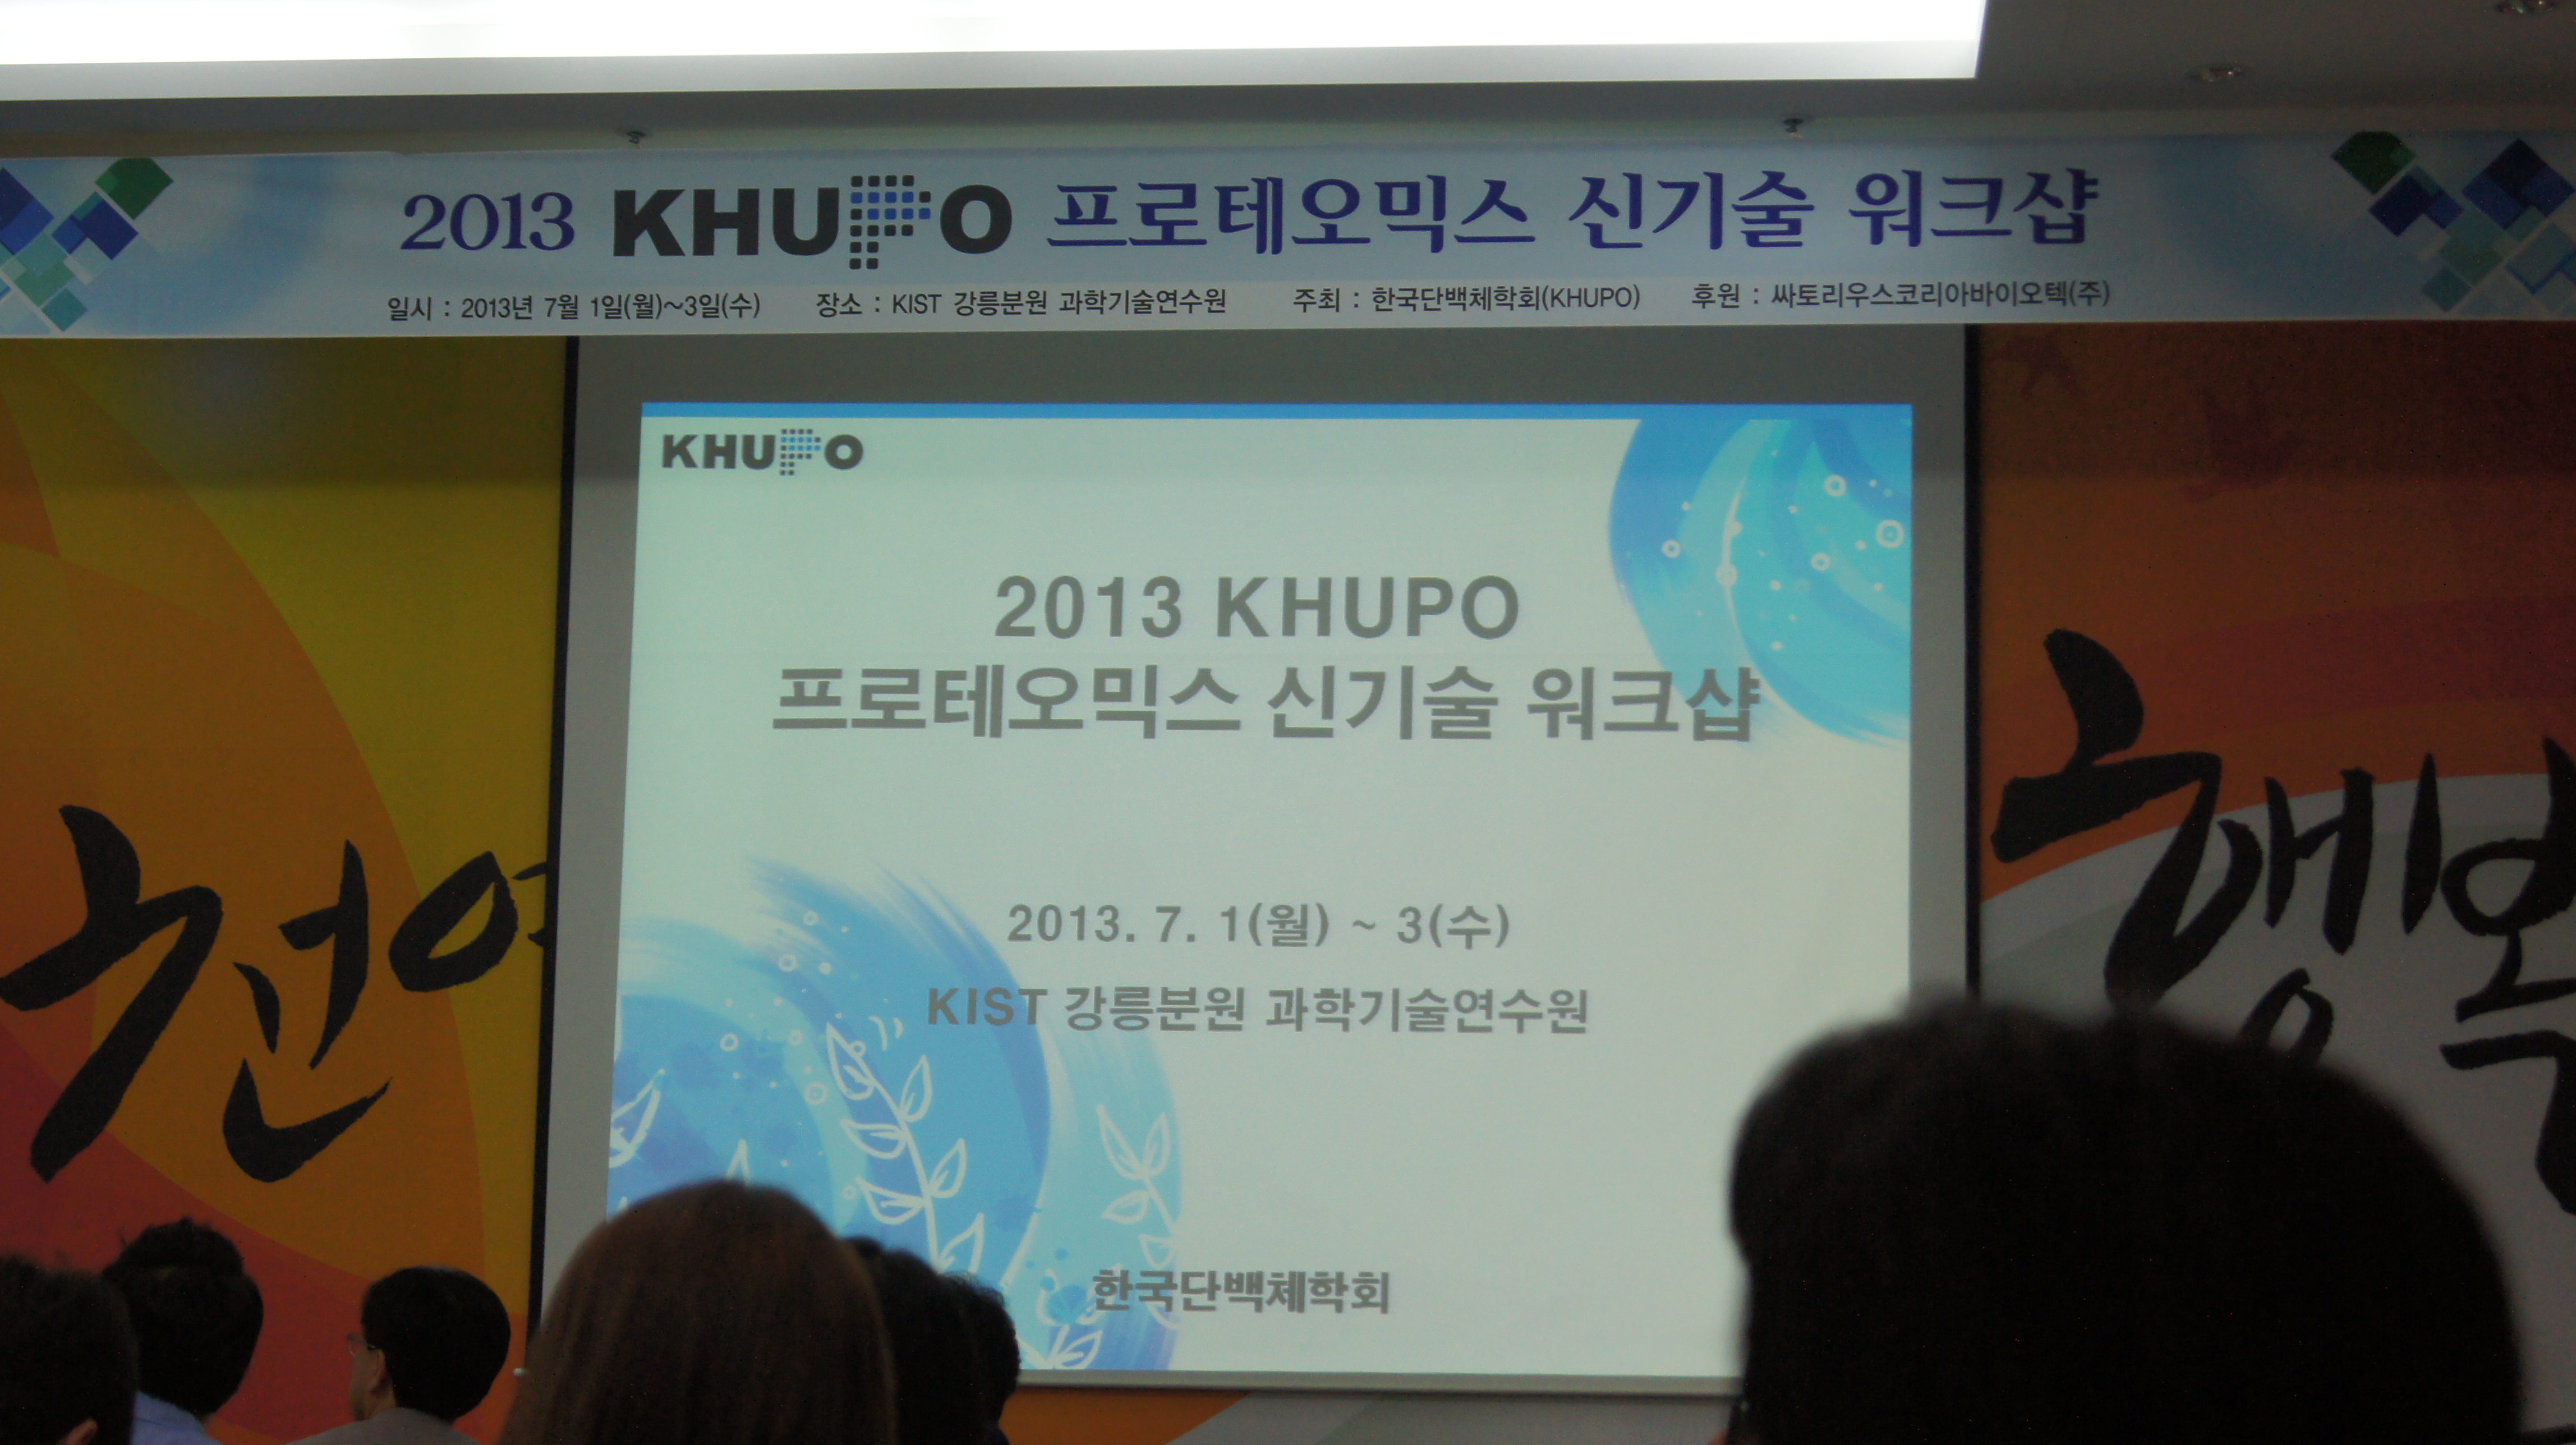 2013 KHUPO 프로테오믹스 신기술 워크샵